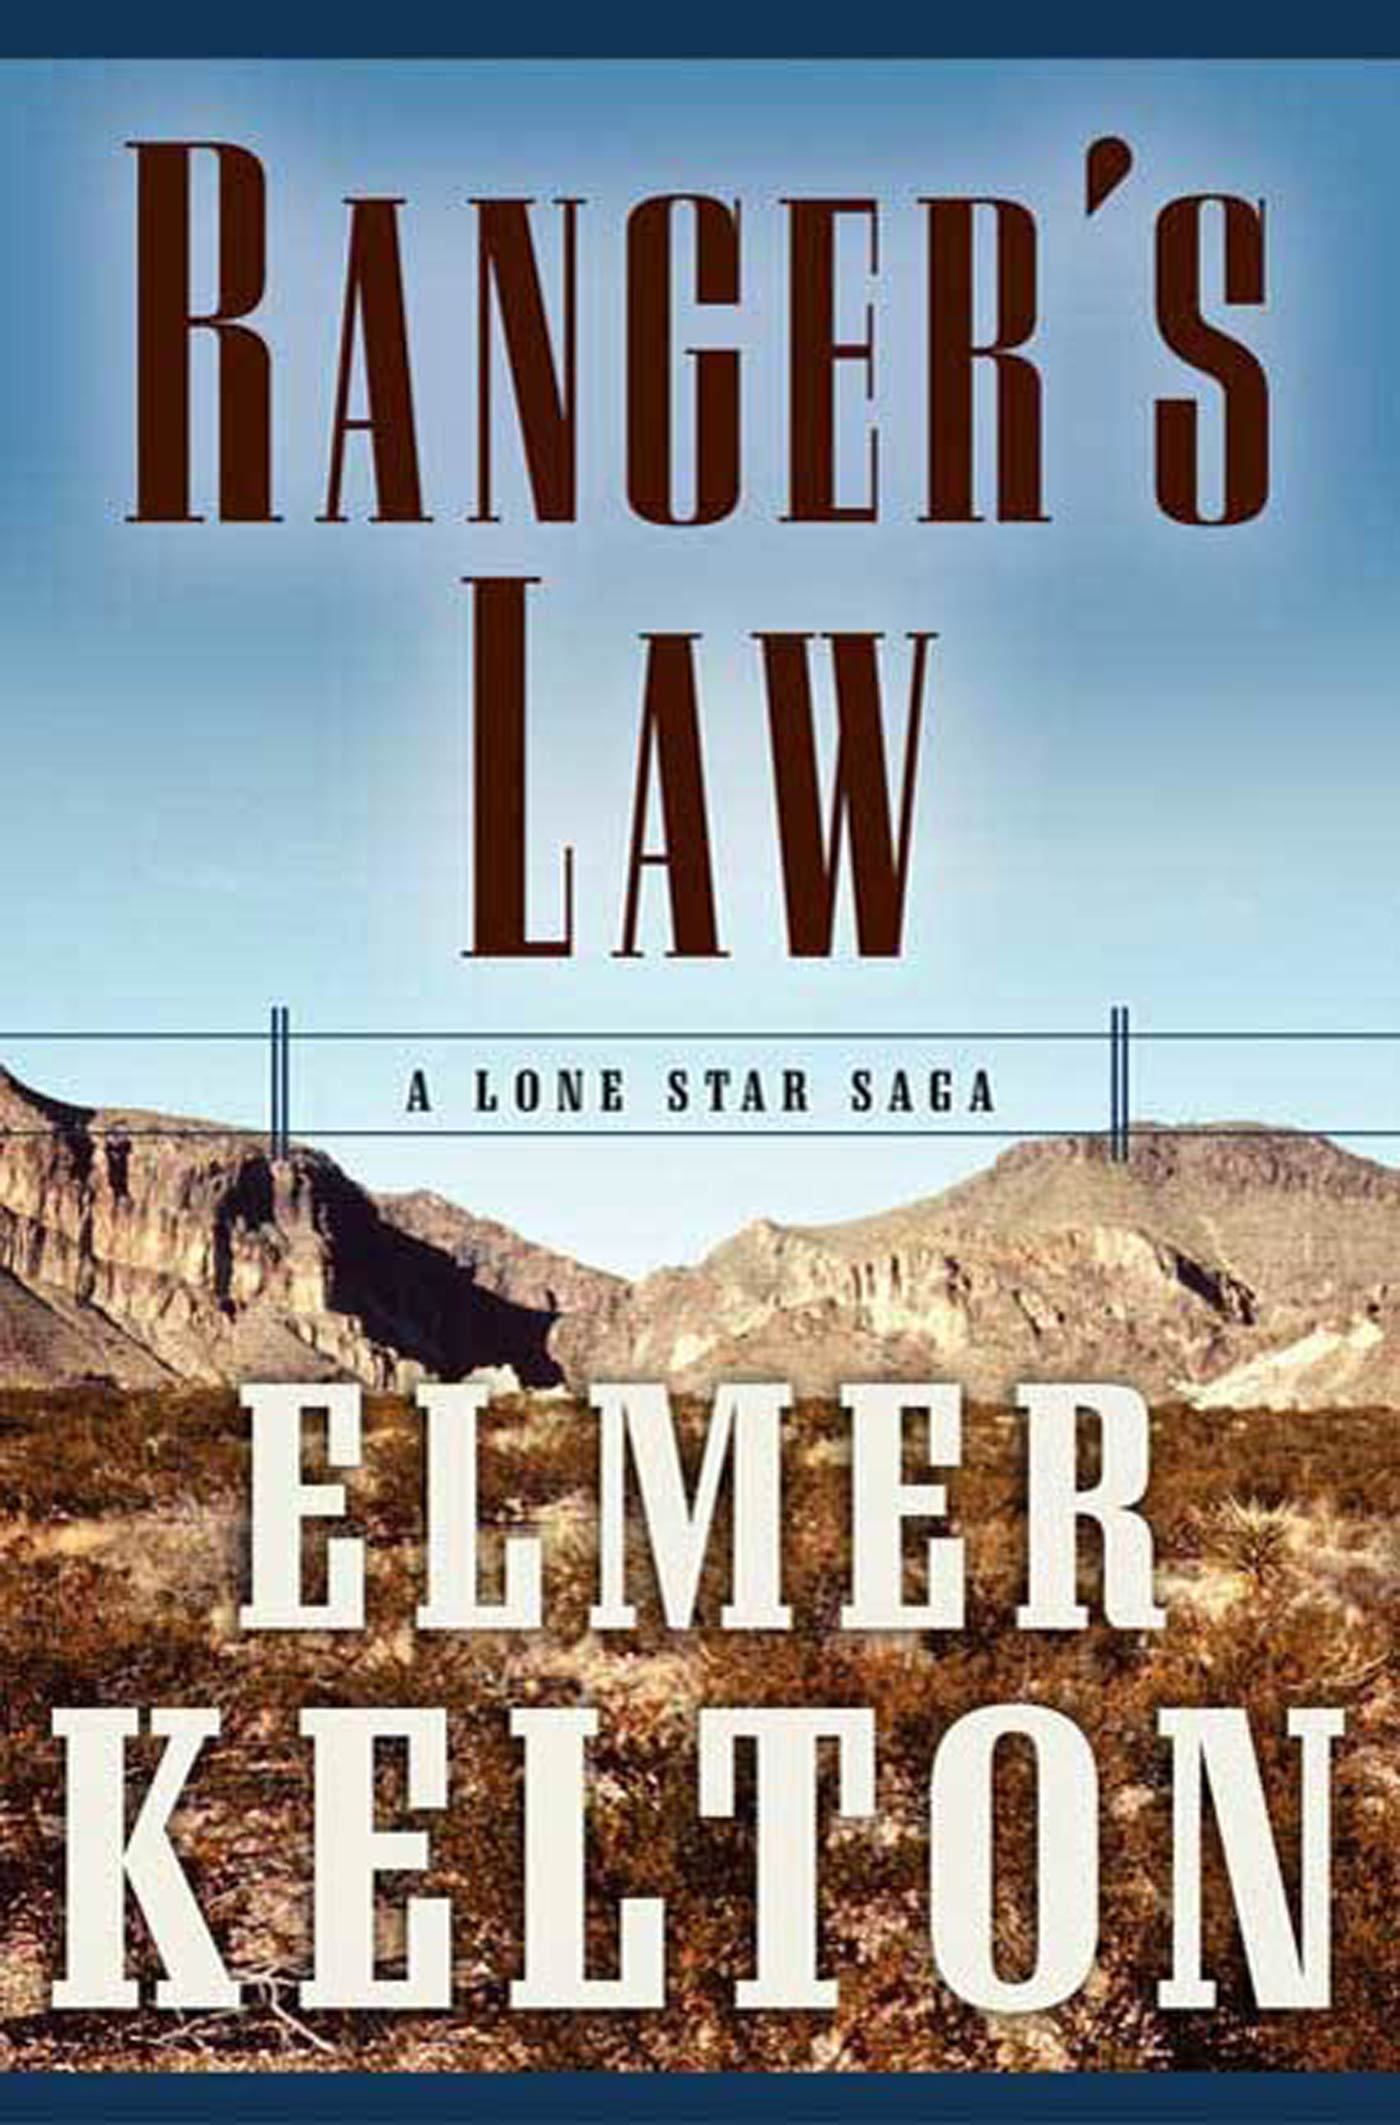 Ranger's Law : A Lone Star Saga by Elmer Kelton